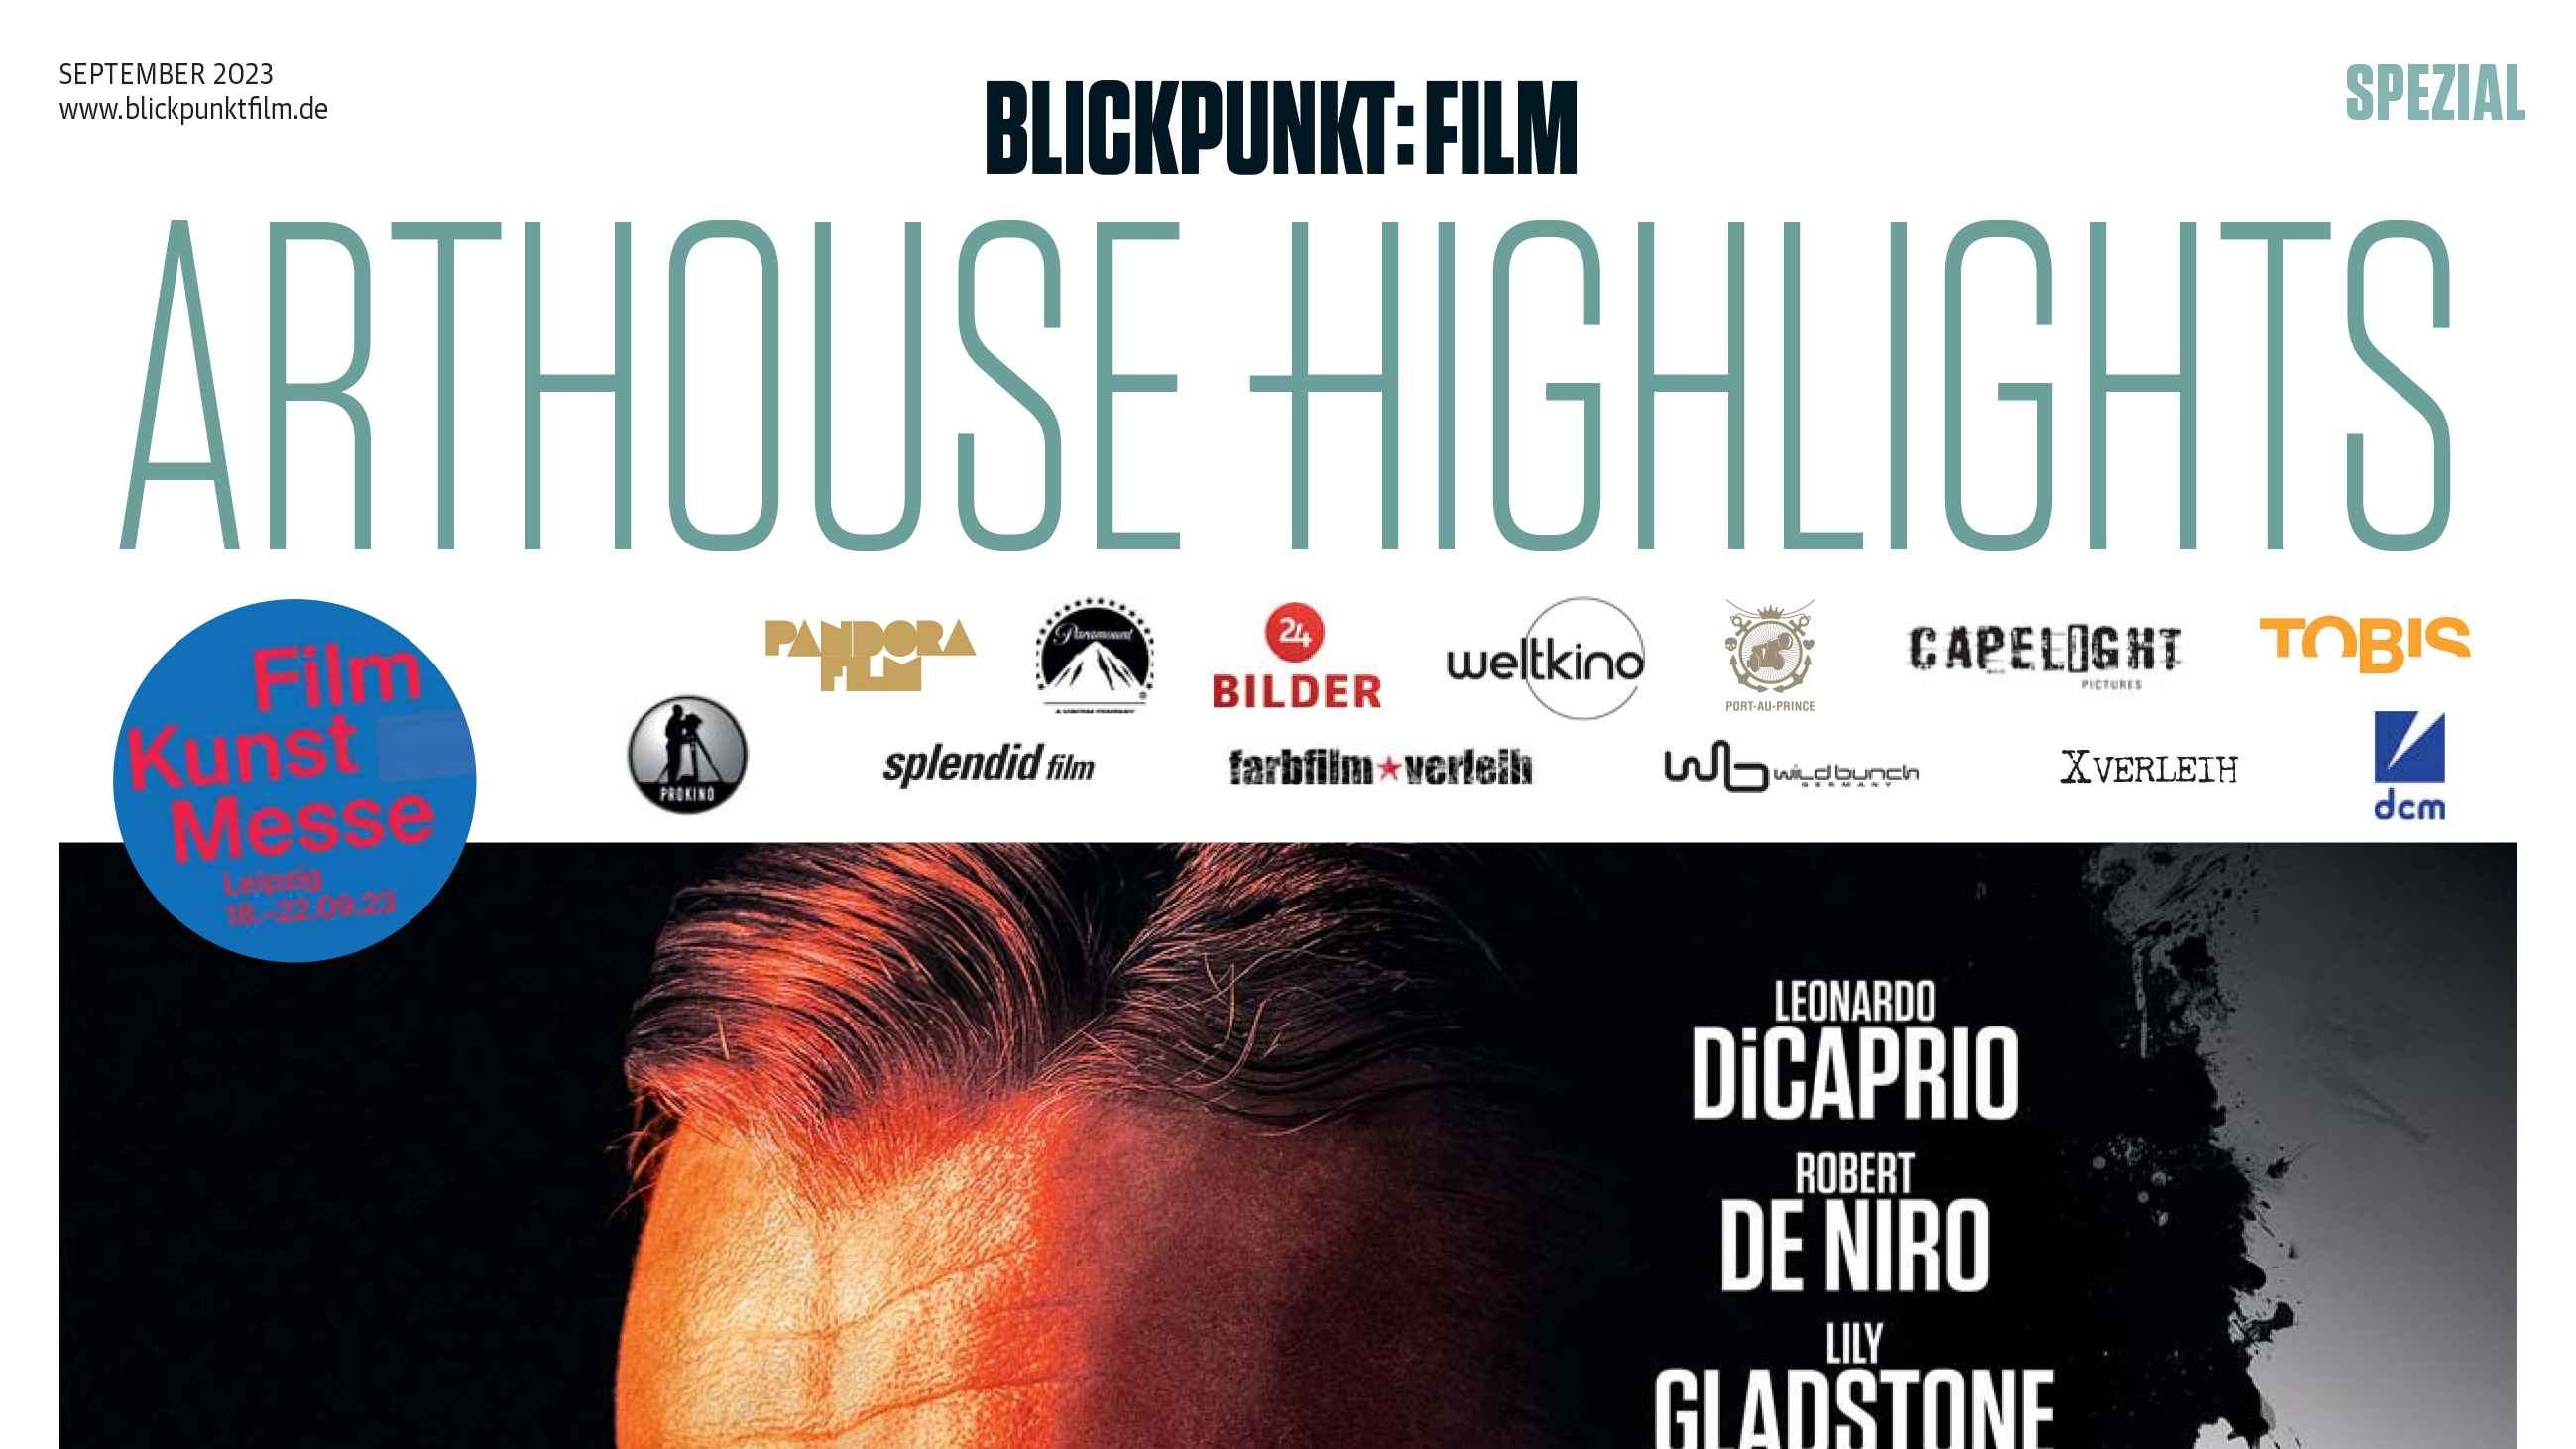 Blickpunkt:Film-Sonderheft „Arthouse-Highlights“ digital erschienen